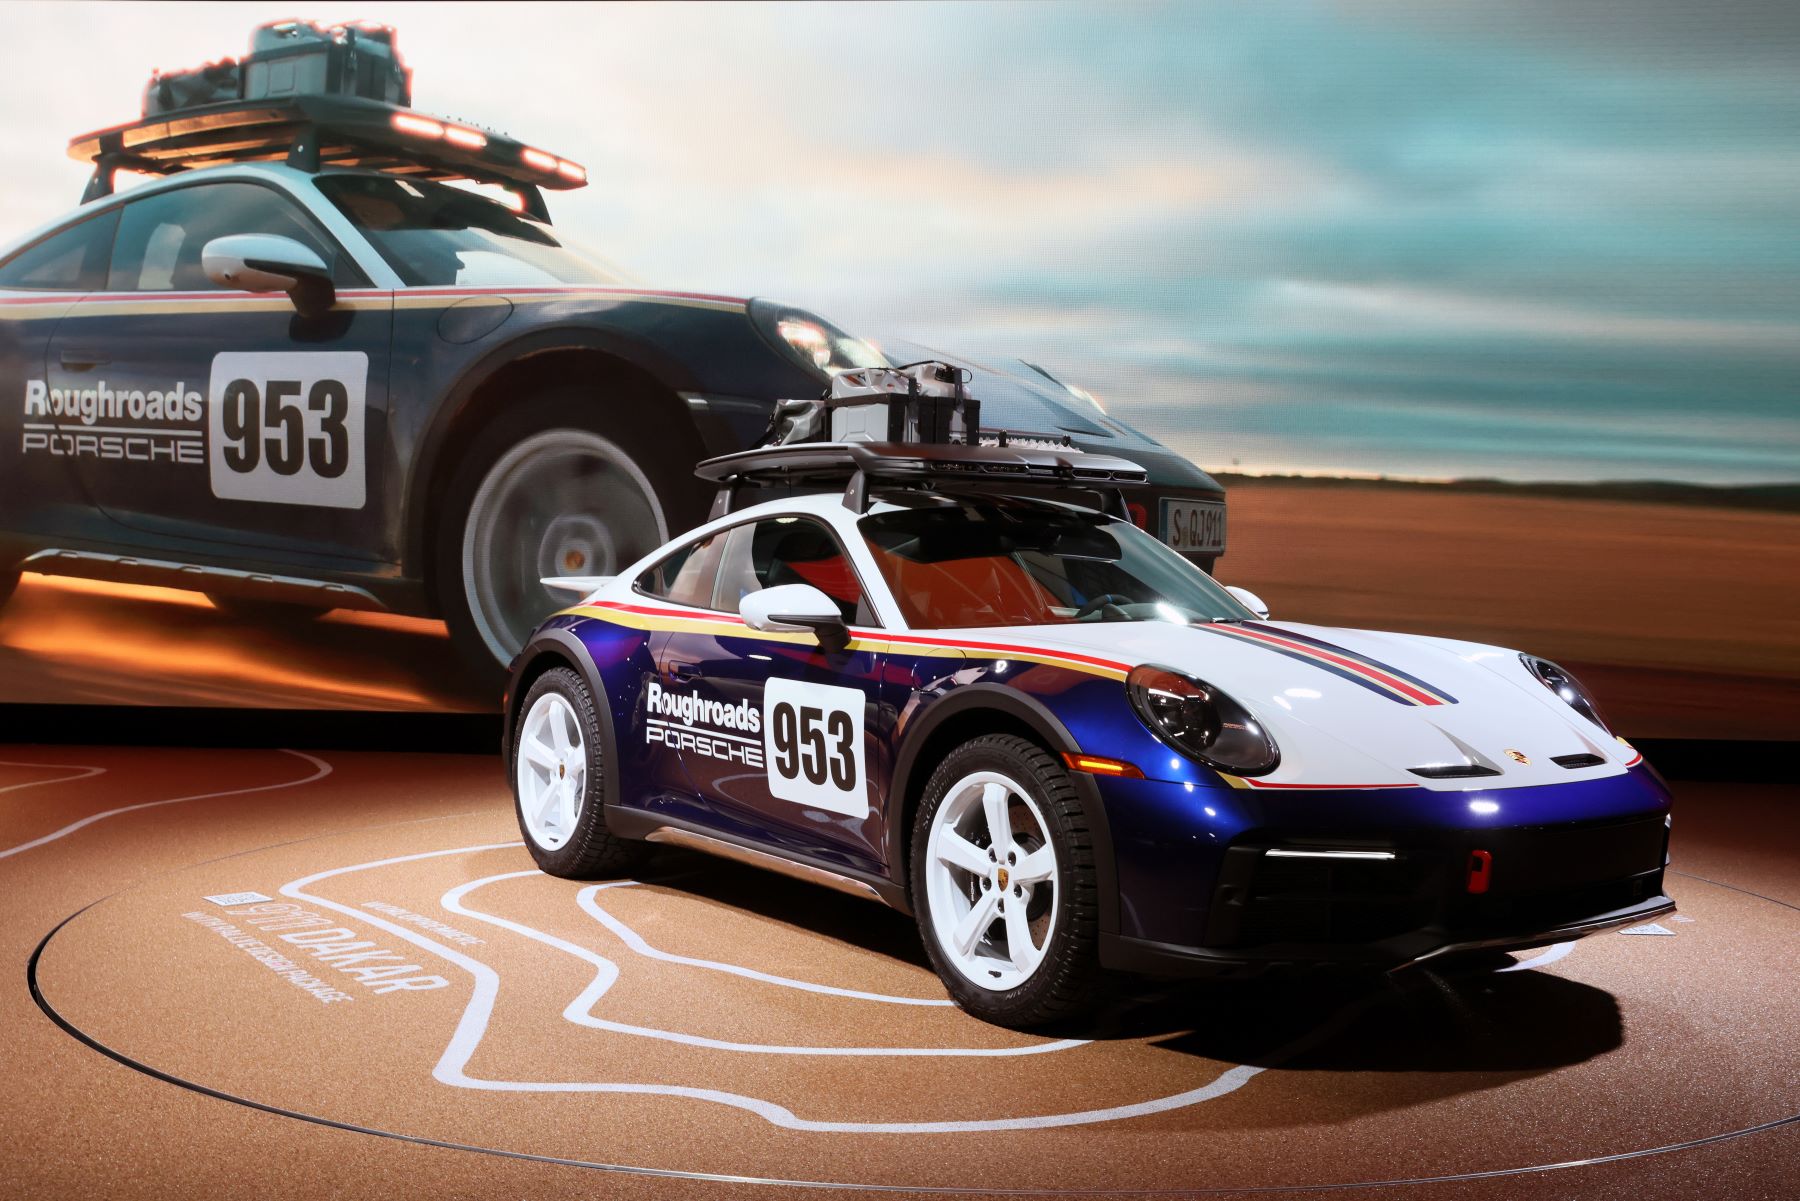 The Porsche 911 Dakar sports car on display at the Los Angeles Auto Show